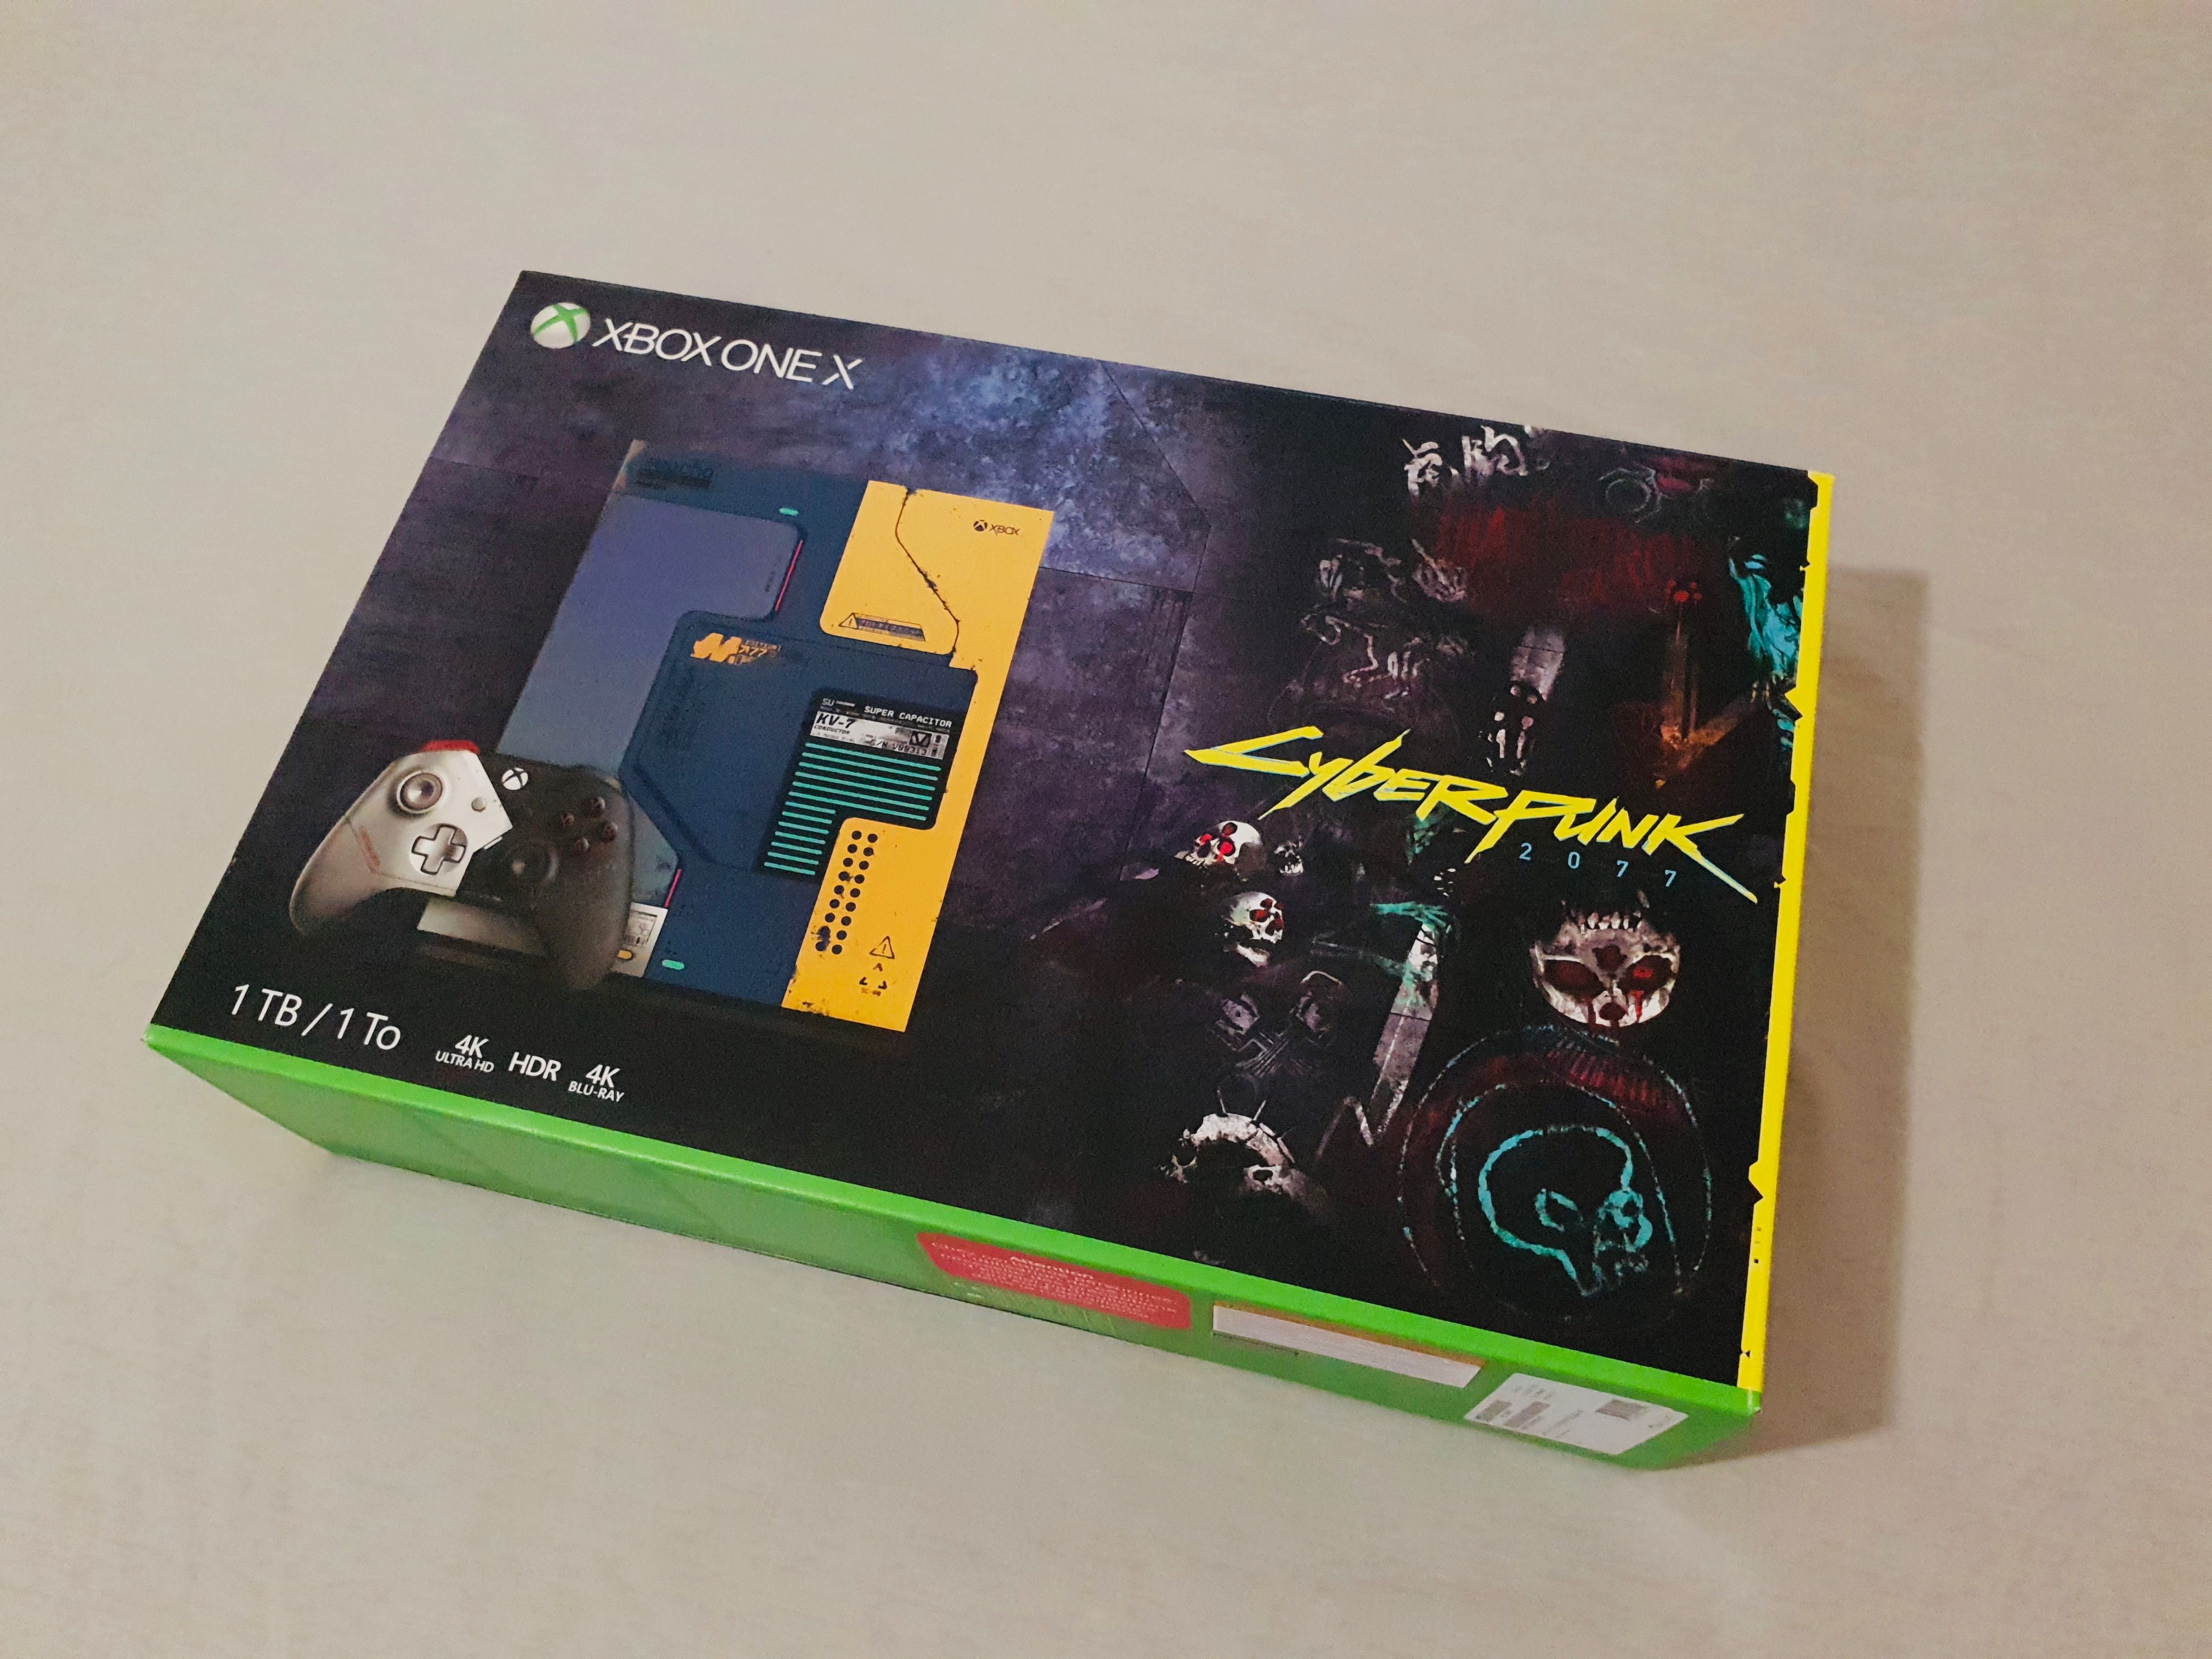 Xbox One X в стиле Cyberpunk 2077. Источник: reddit